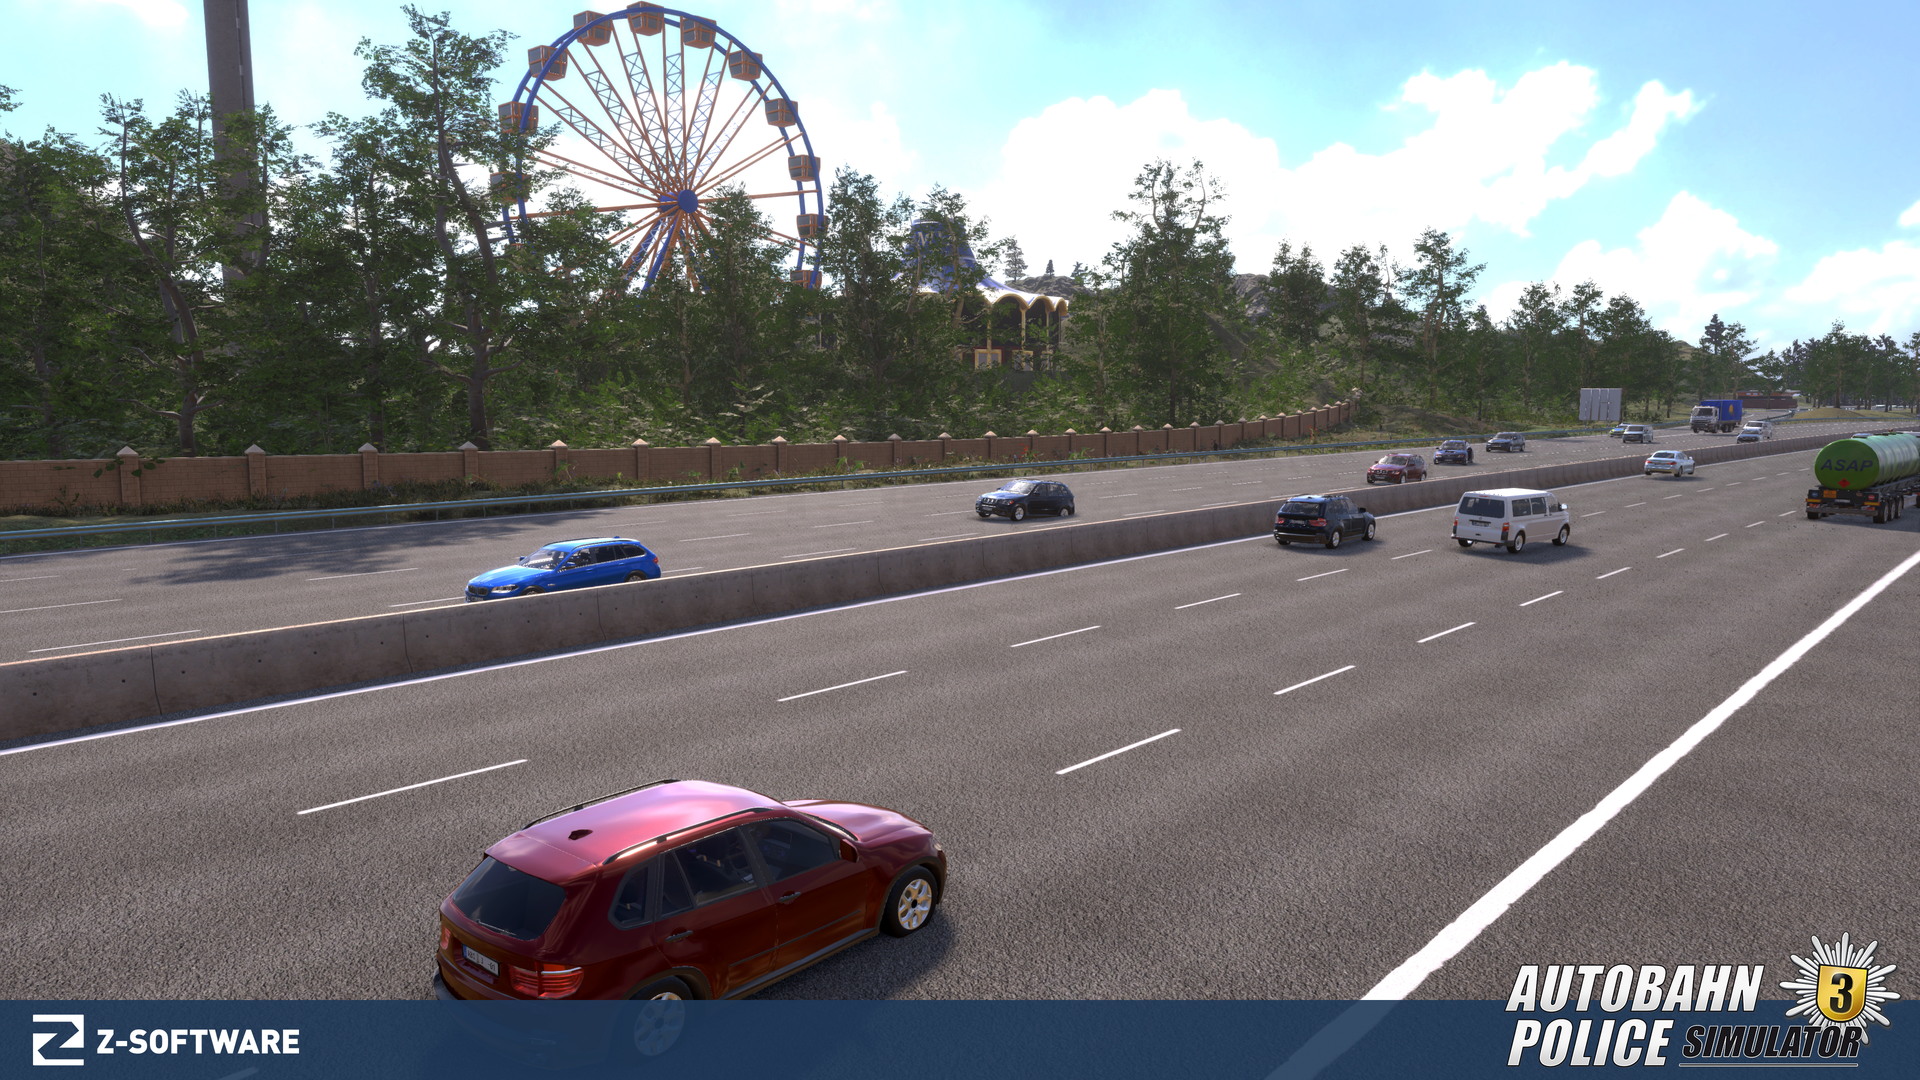 Autobahn Police Simulator 3 - screenshot 11